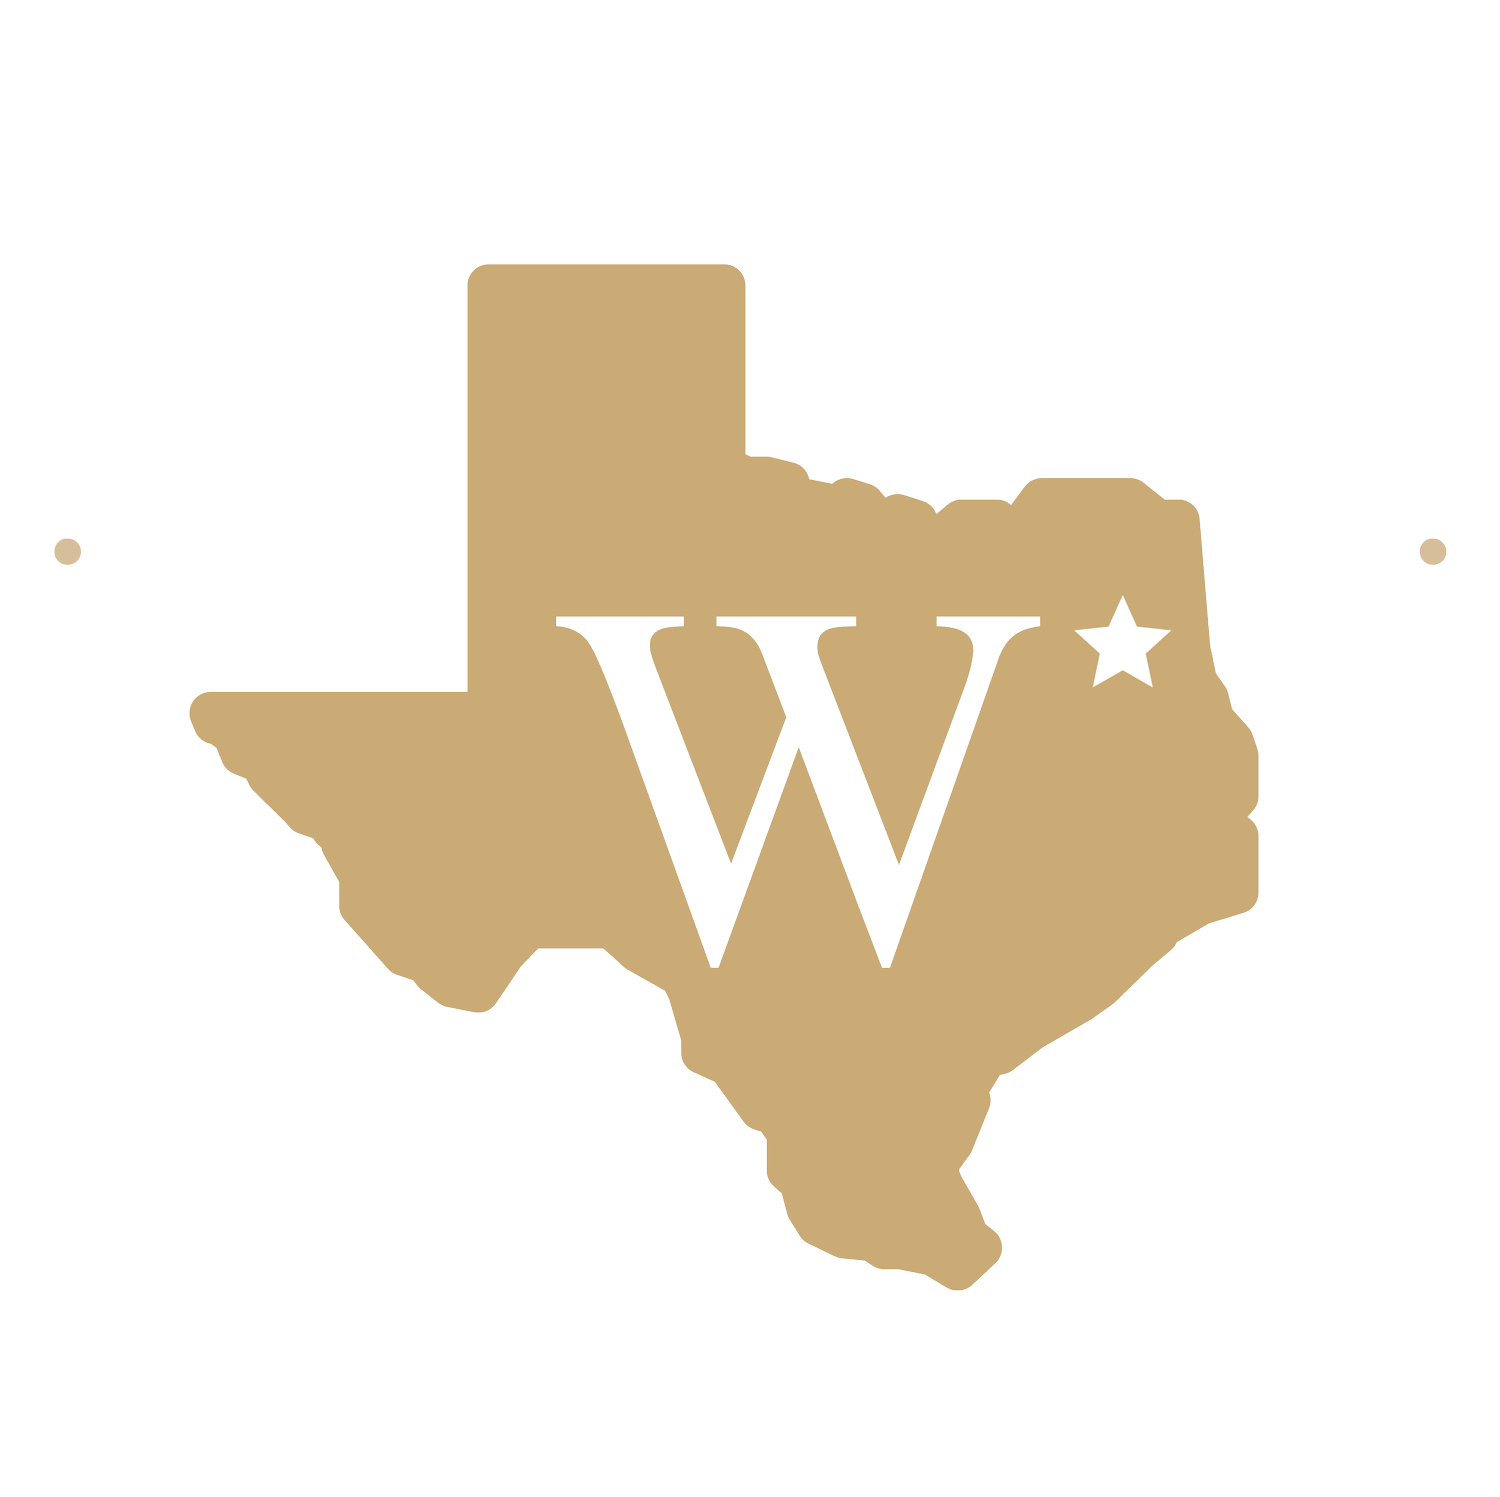 Winona Area Chamber of Commerce